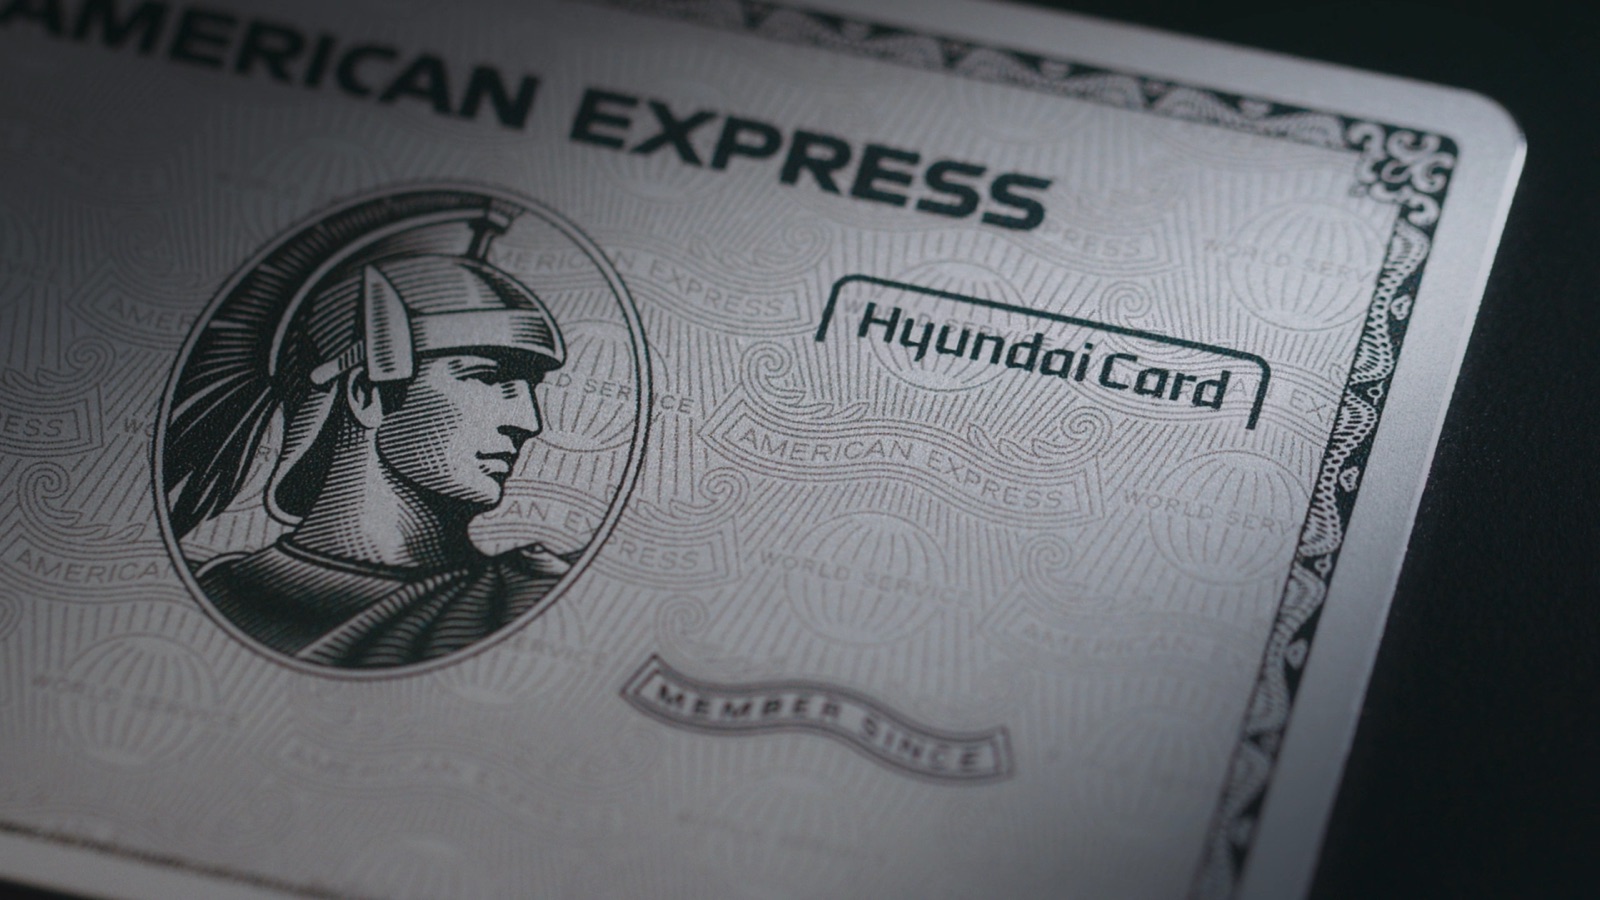 American Express® Cards by Hyundai Card 